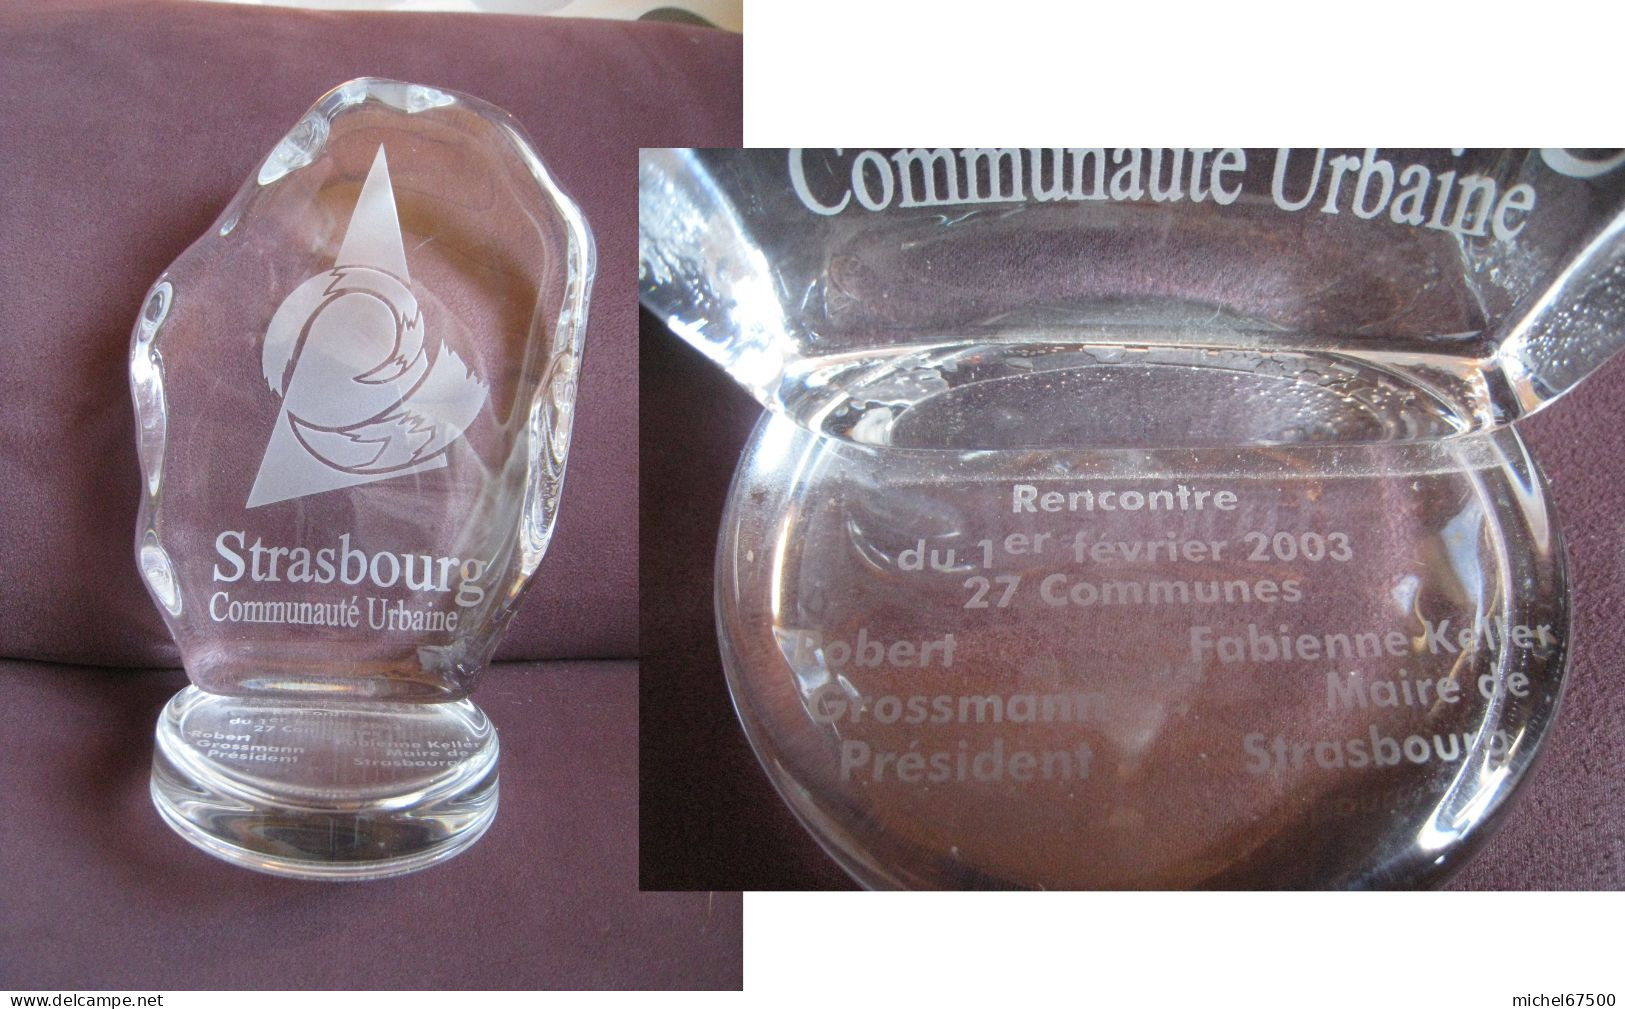 STRASBOURG Communauté Urbaine Objet Commémoratif  Rencontre Du 1er Février 2003 27 Communes - Obj. 'Herinnering Van'